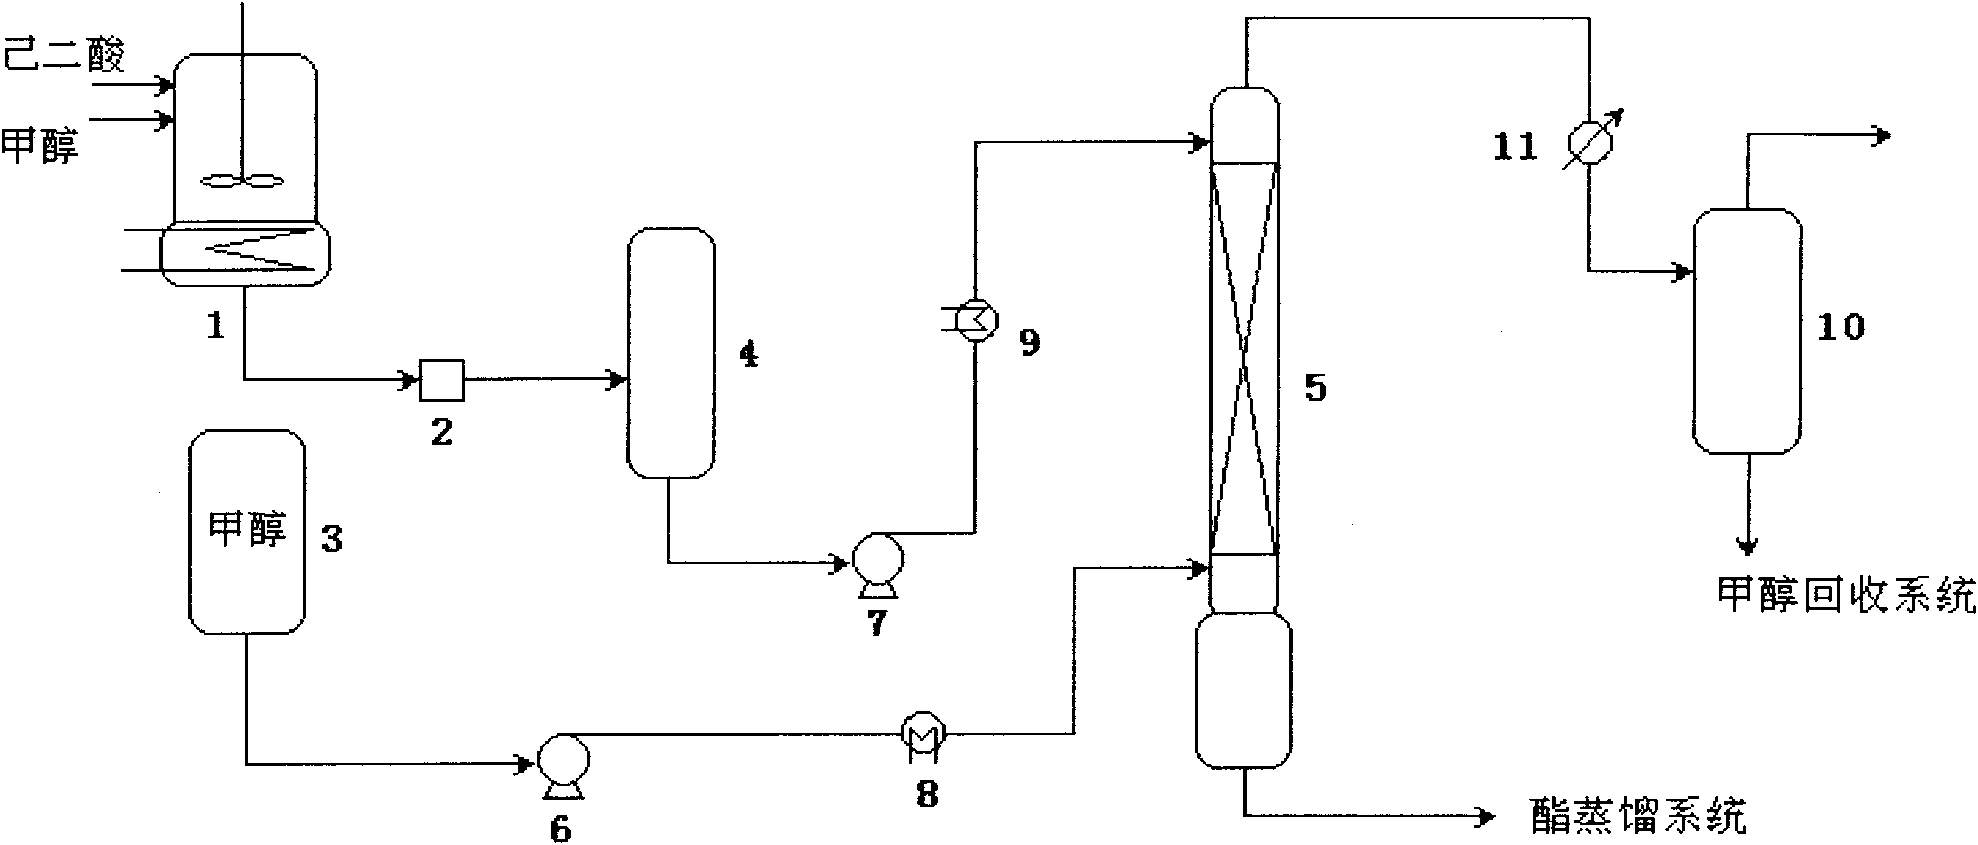 Method for producing 1,6-dimethyl adipate